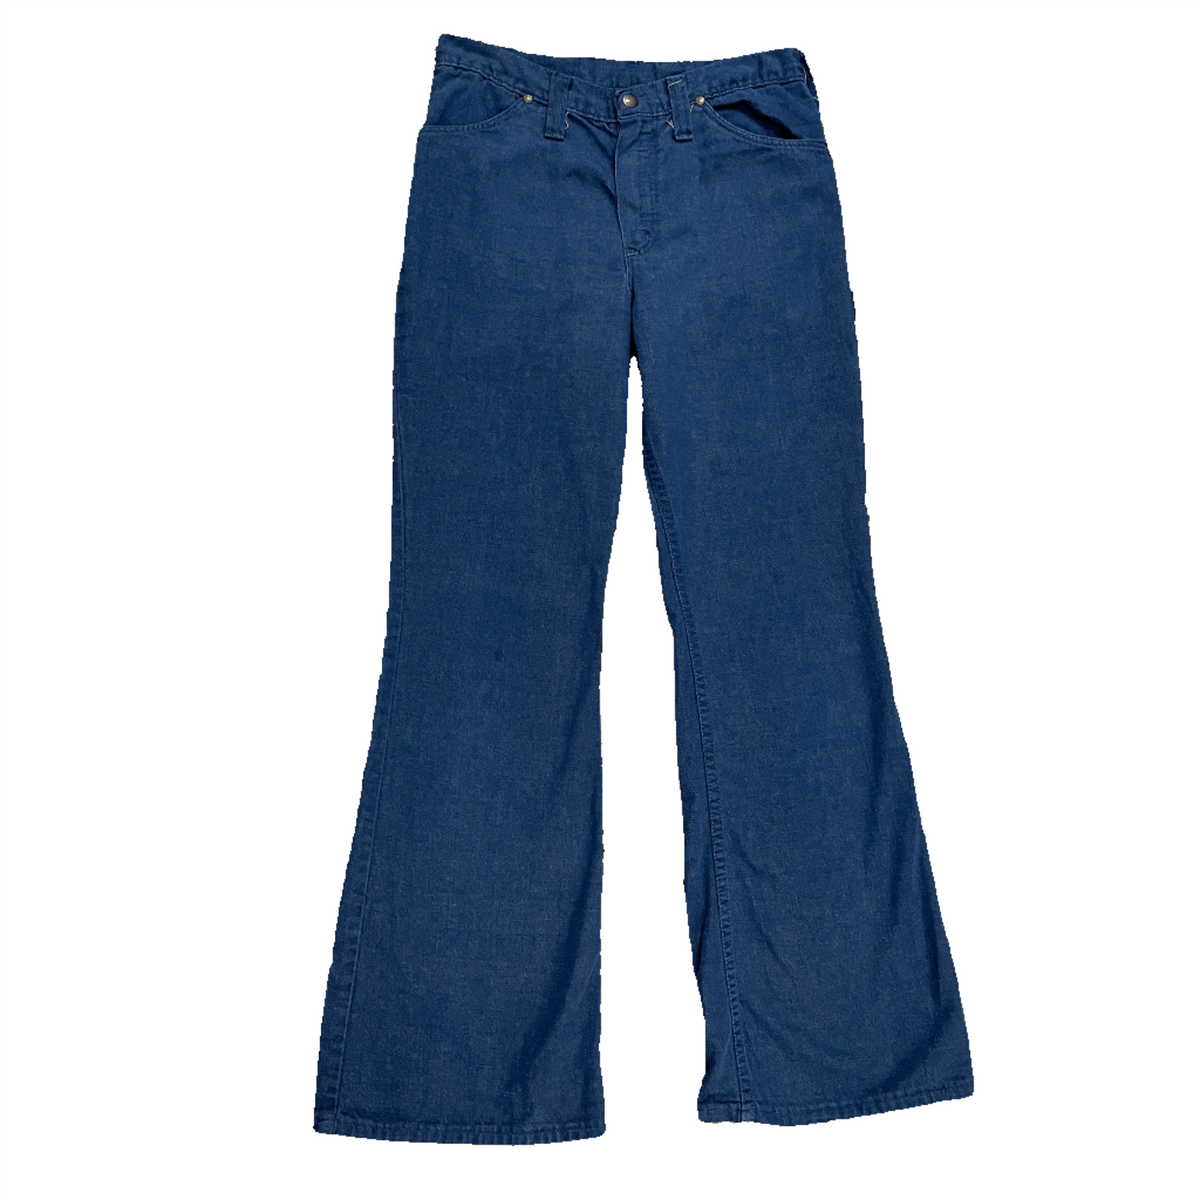 Vintage Men's Wrangler Jeans Print Ad 1970s Fashion, Style, Bell Bottoms,  Guys